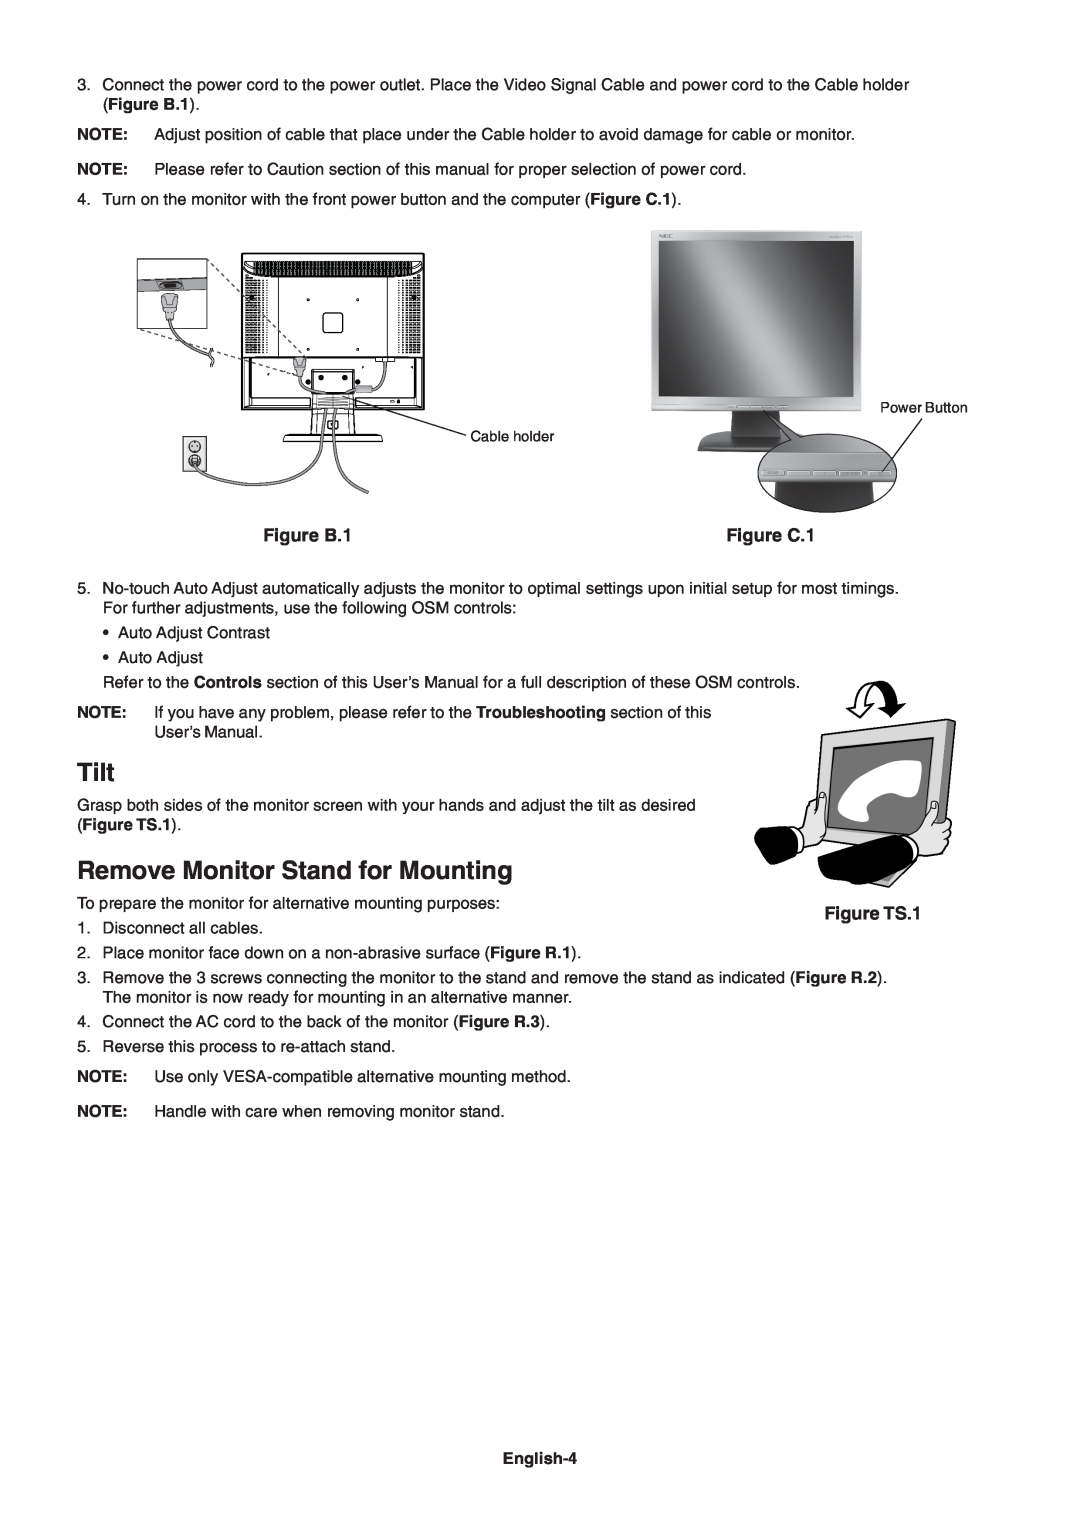 NEC LCD73V, LCD93V, LCD190V, LCD170V user manual Tilt, Remove Monitor Stand for Mounting, Figure B.1, Figure C.1, English-4 